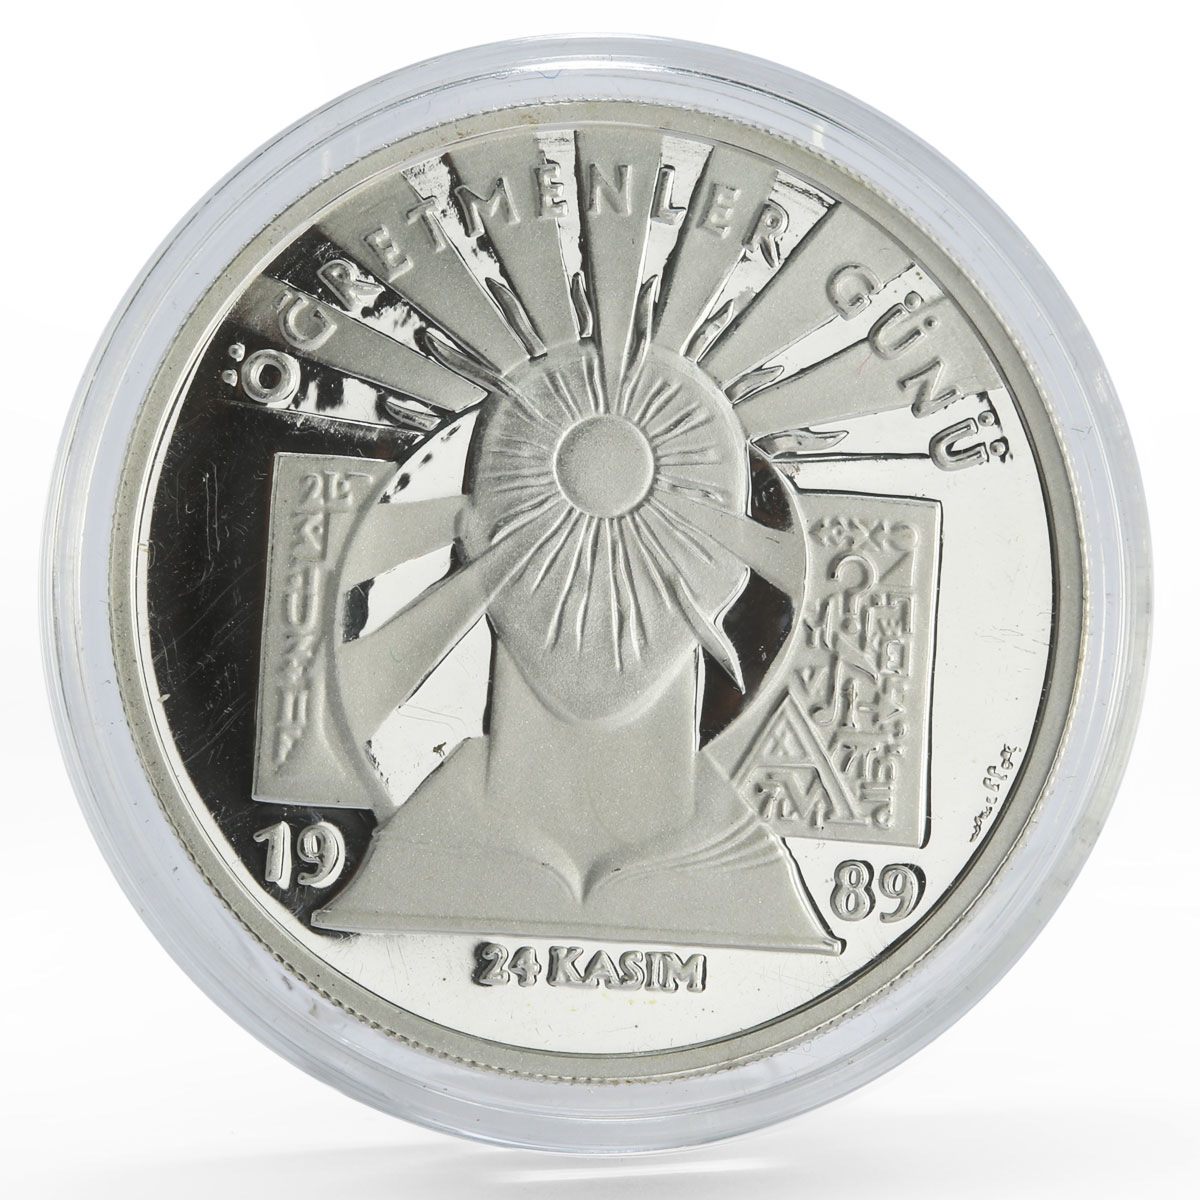 Turkey 20000 lira Teacher's Day Knowledge School proof silver coin 1989